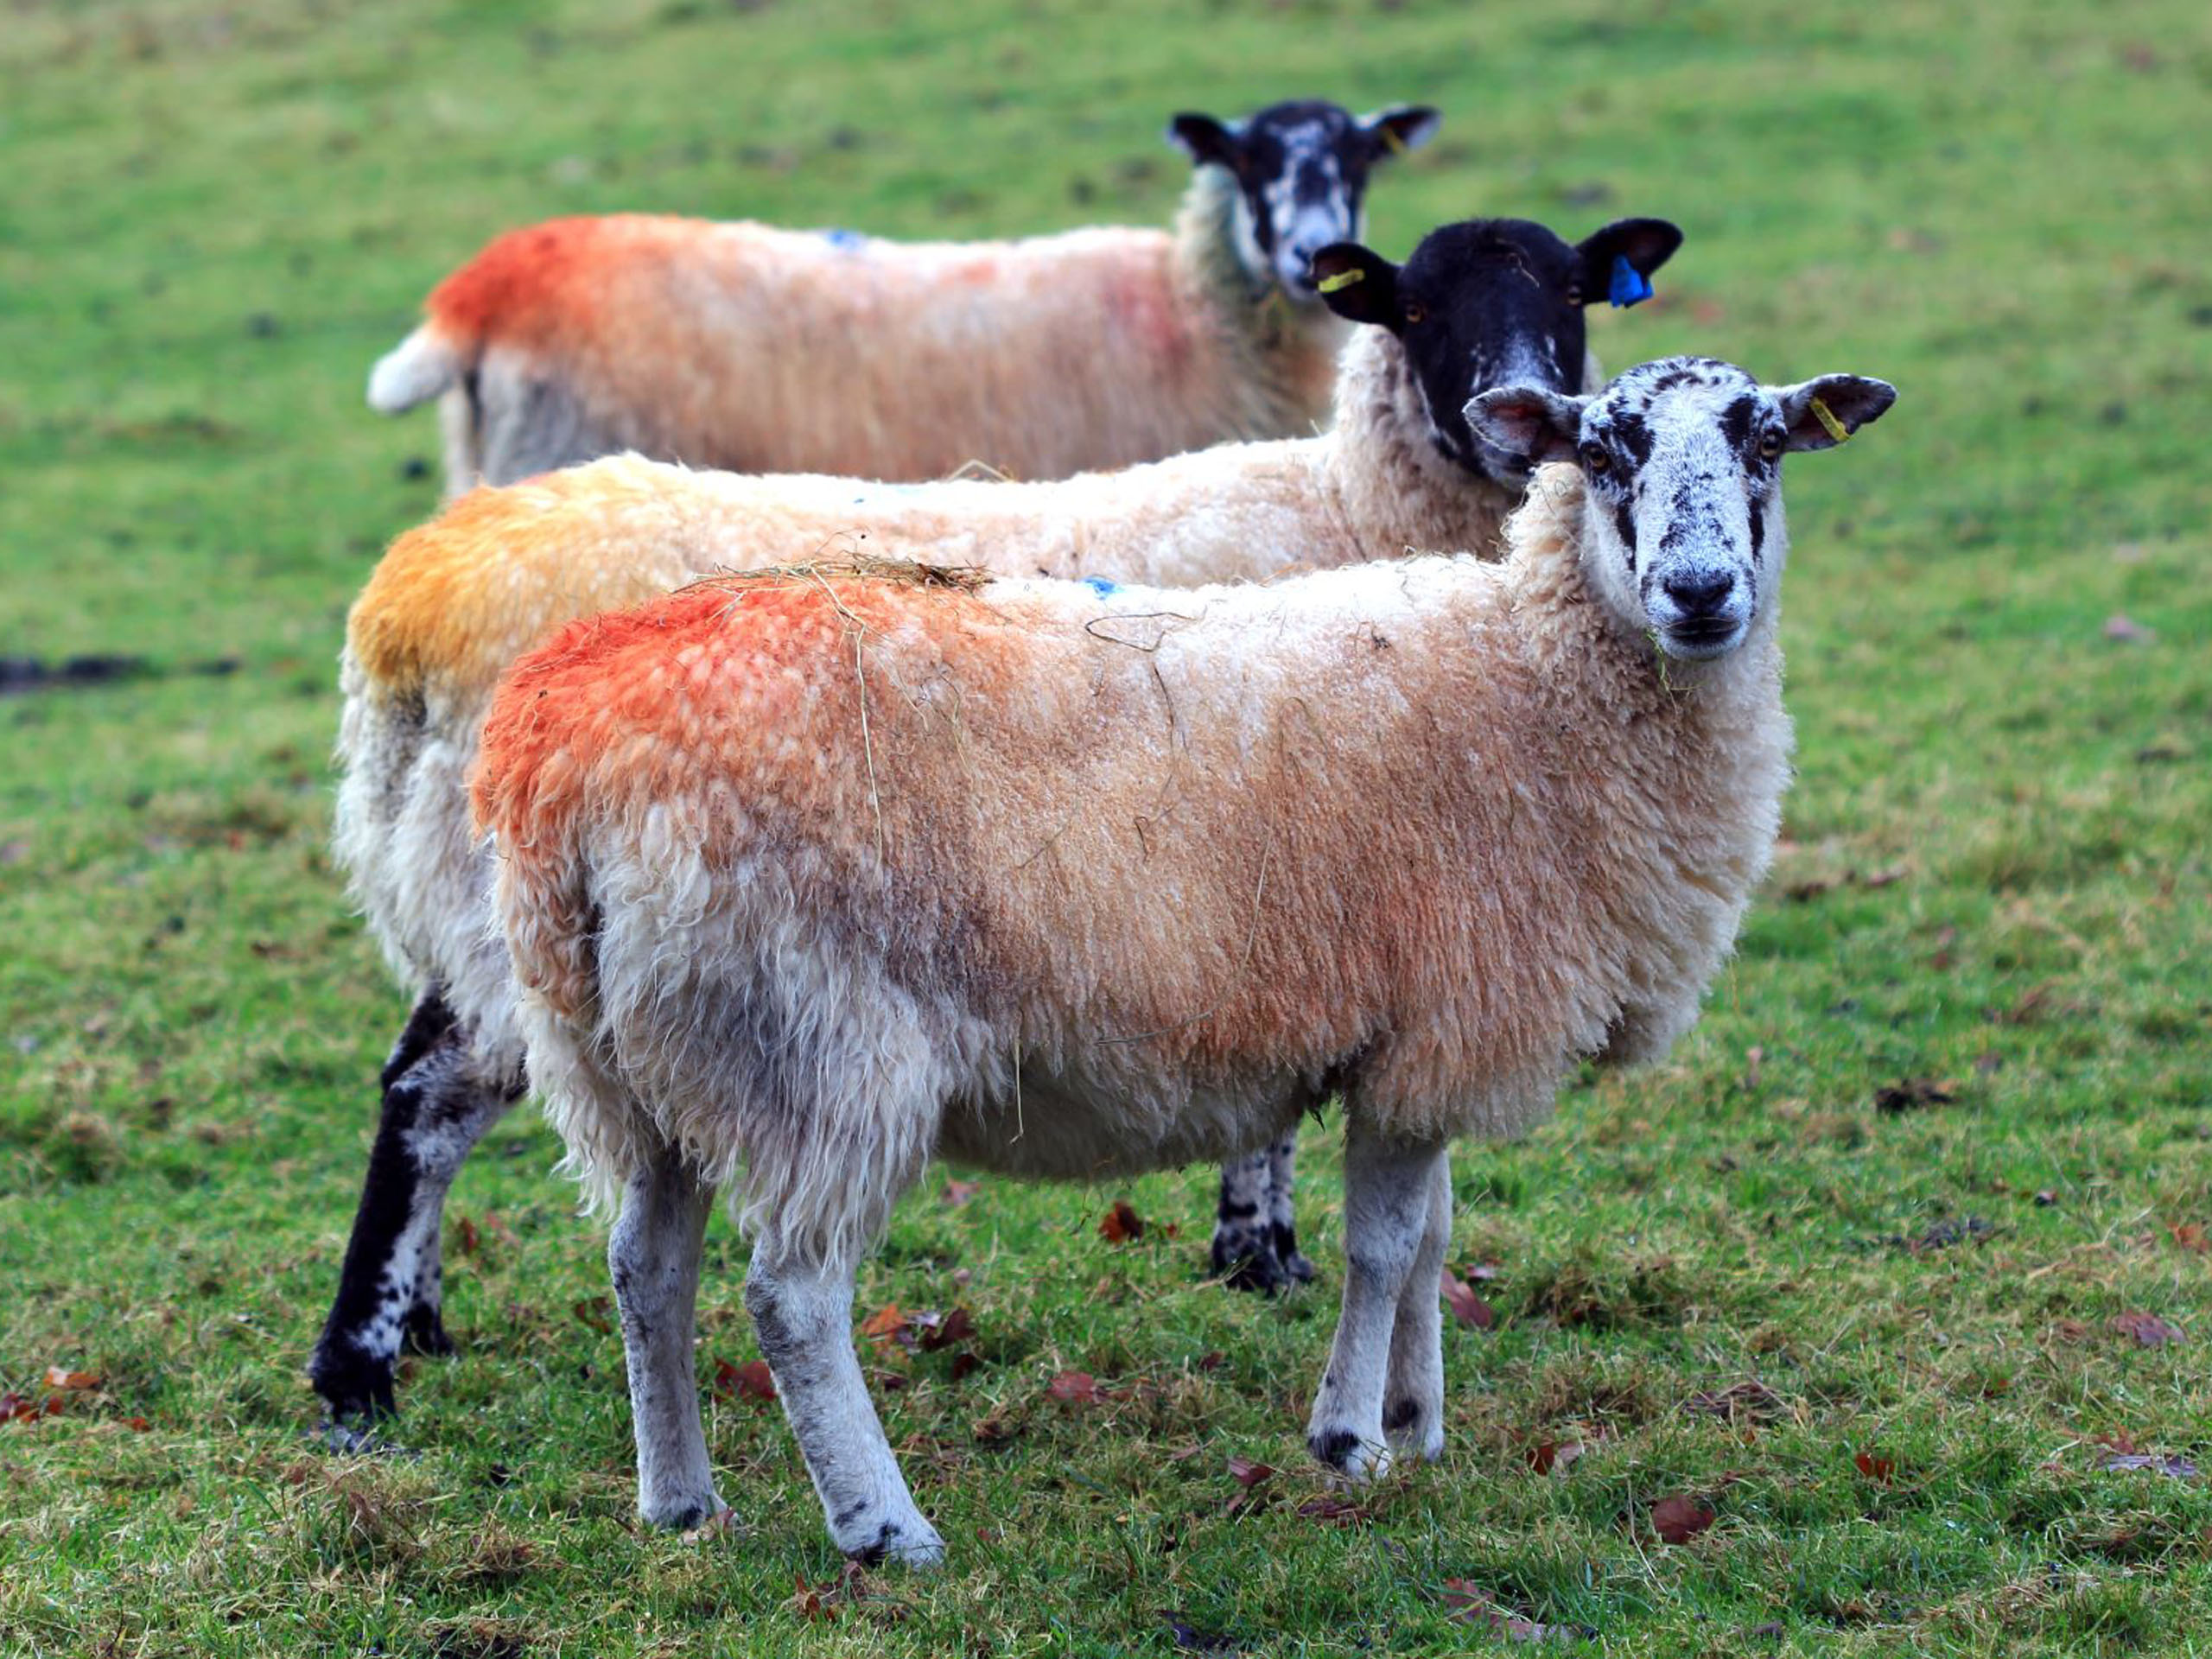 Three sprayed sheep in a field looking at camera